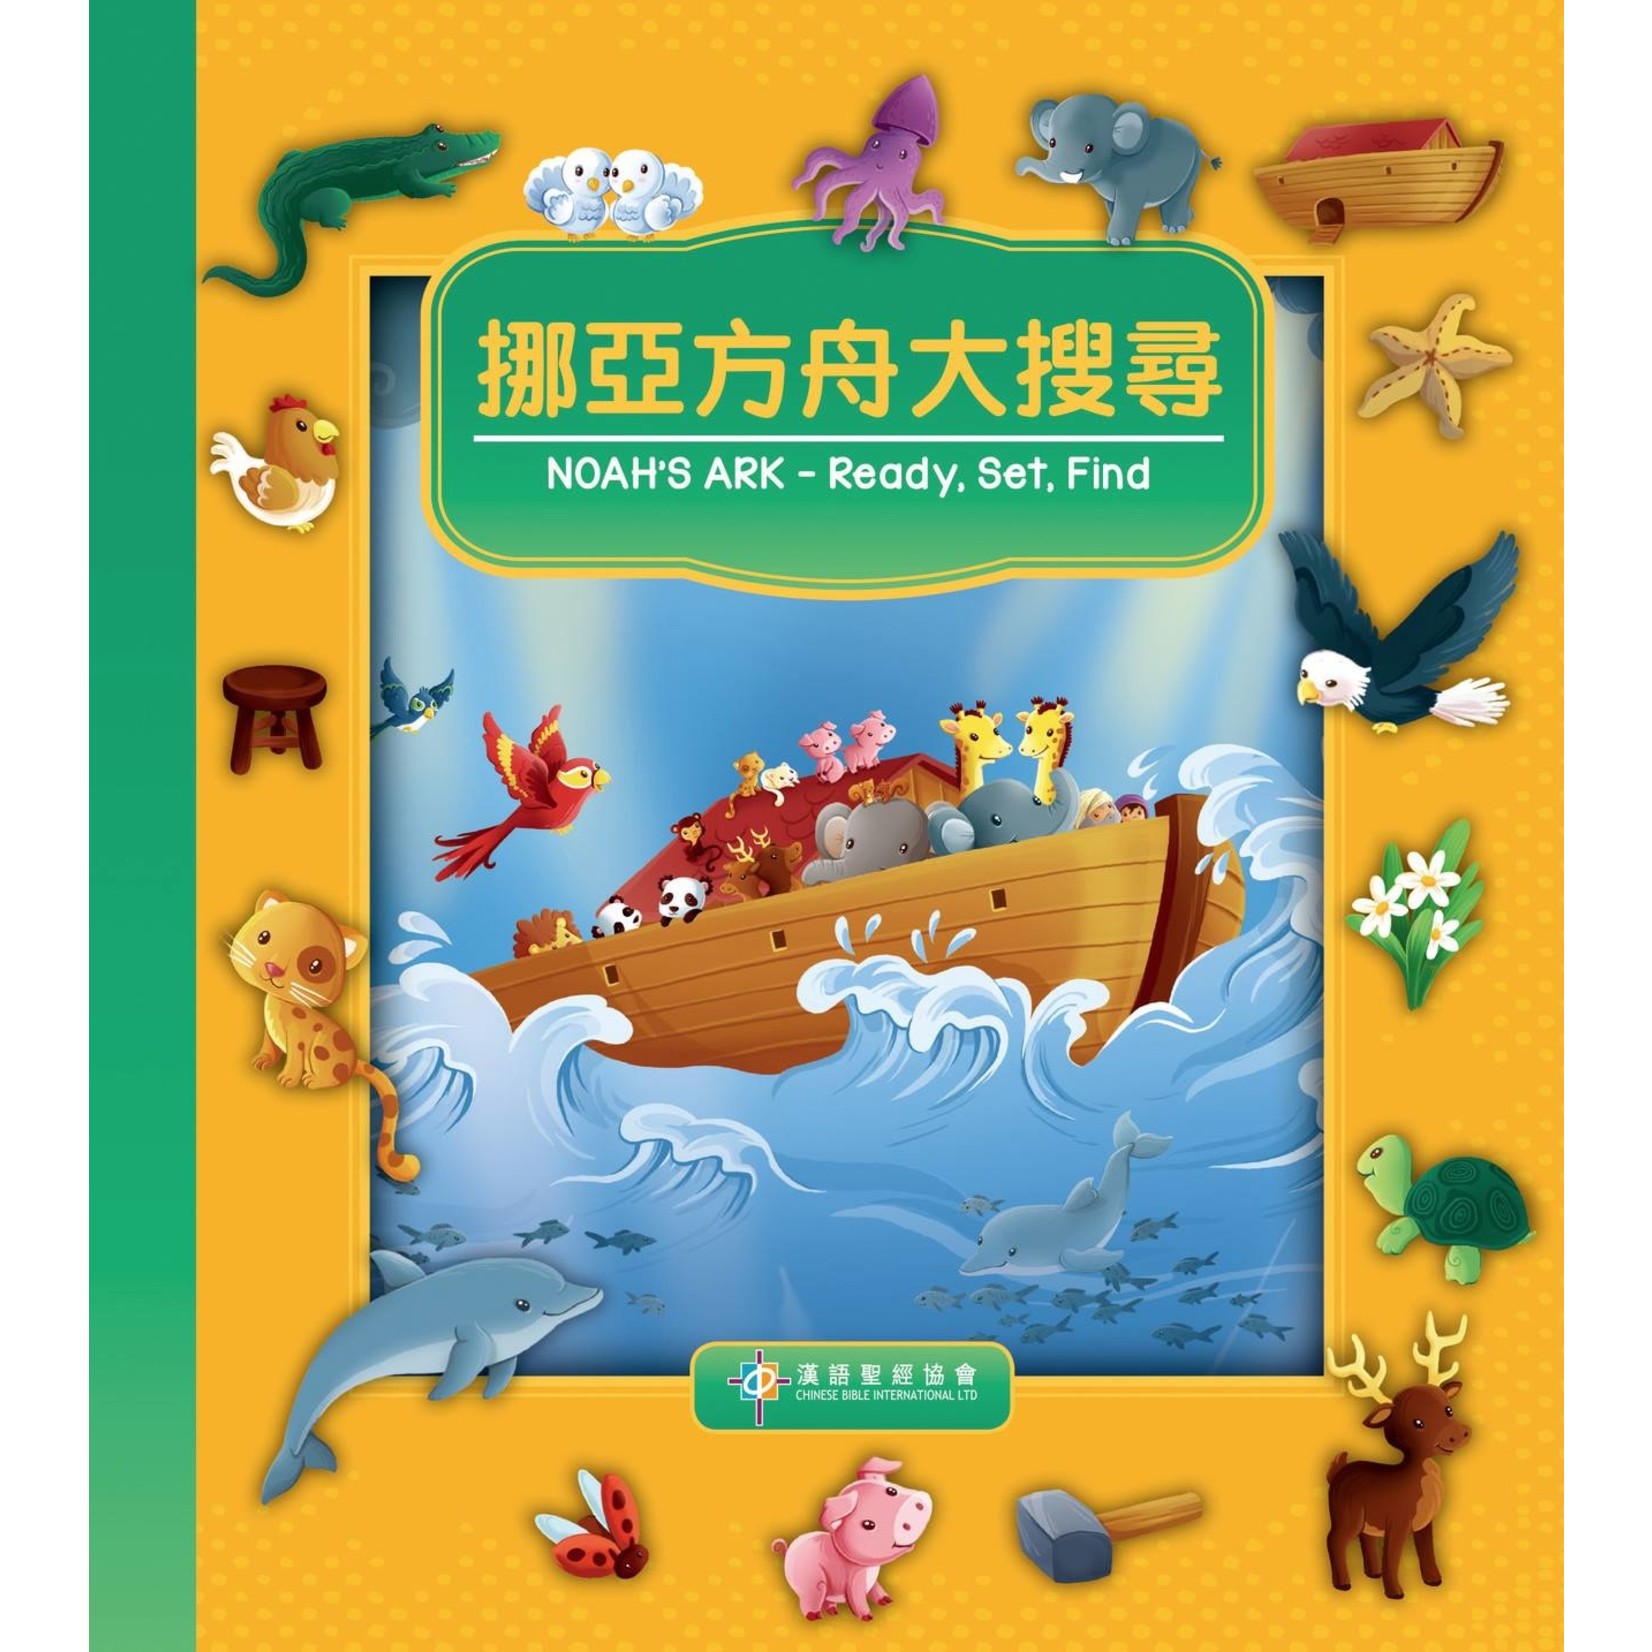 漢語聖經協會 Chinese Bible International 挪亞方舟大搜尋（中英對照）（繁體） Ready, Set, Find - Noah's Ark, Traditional Chinese/English, Boardbook